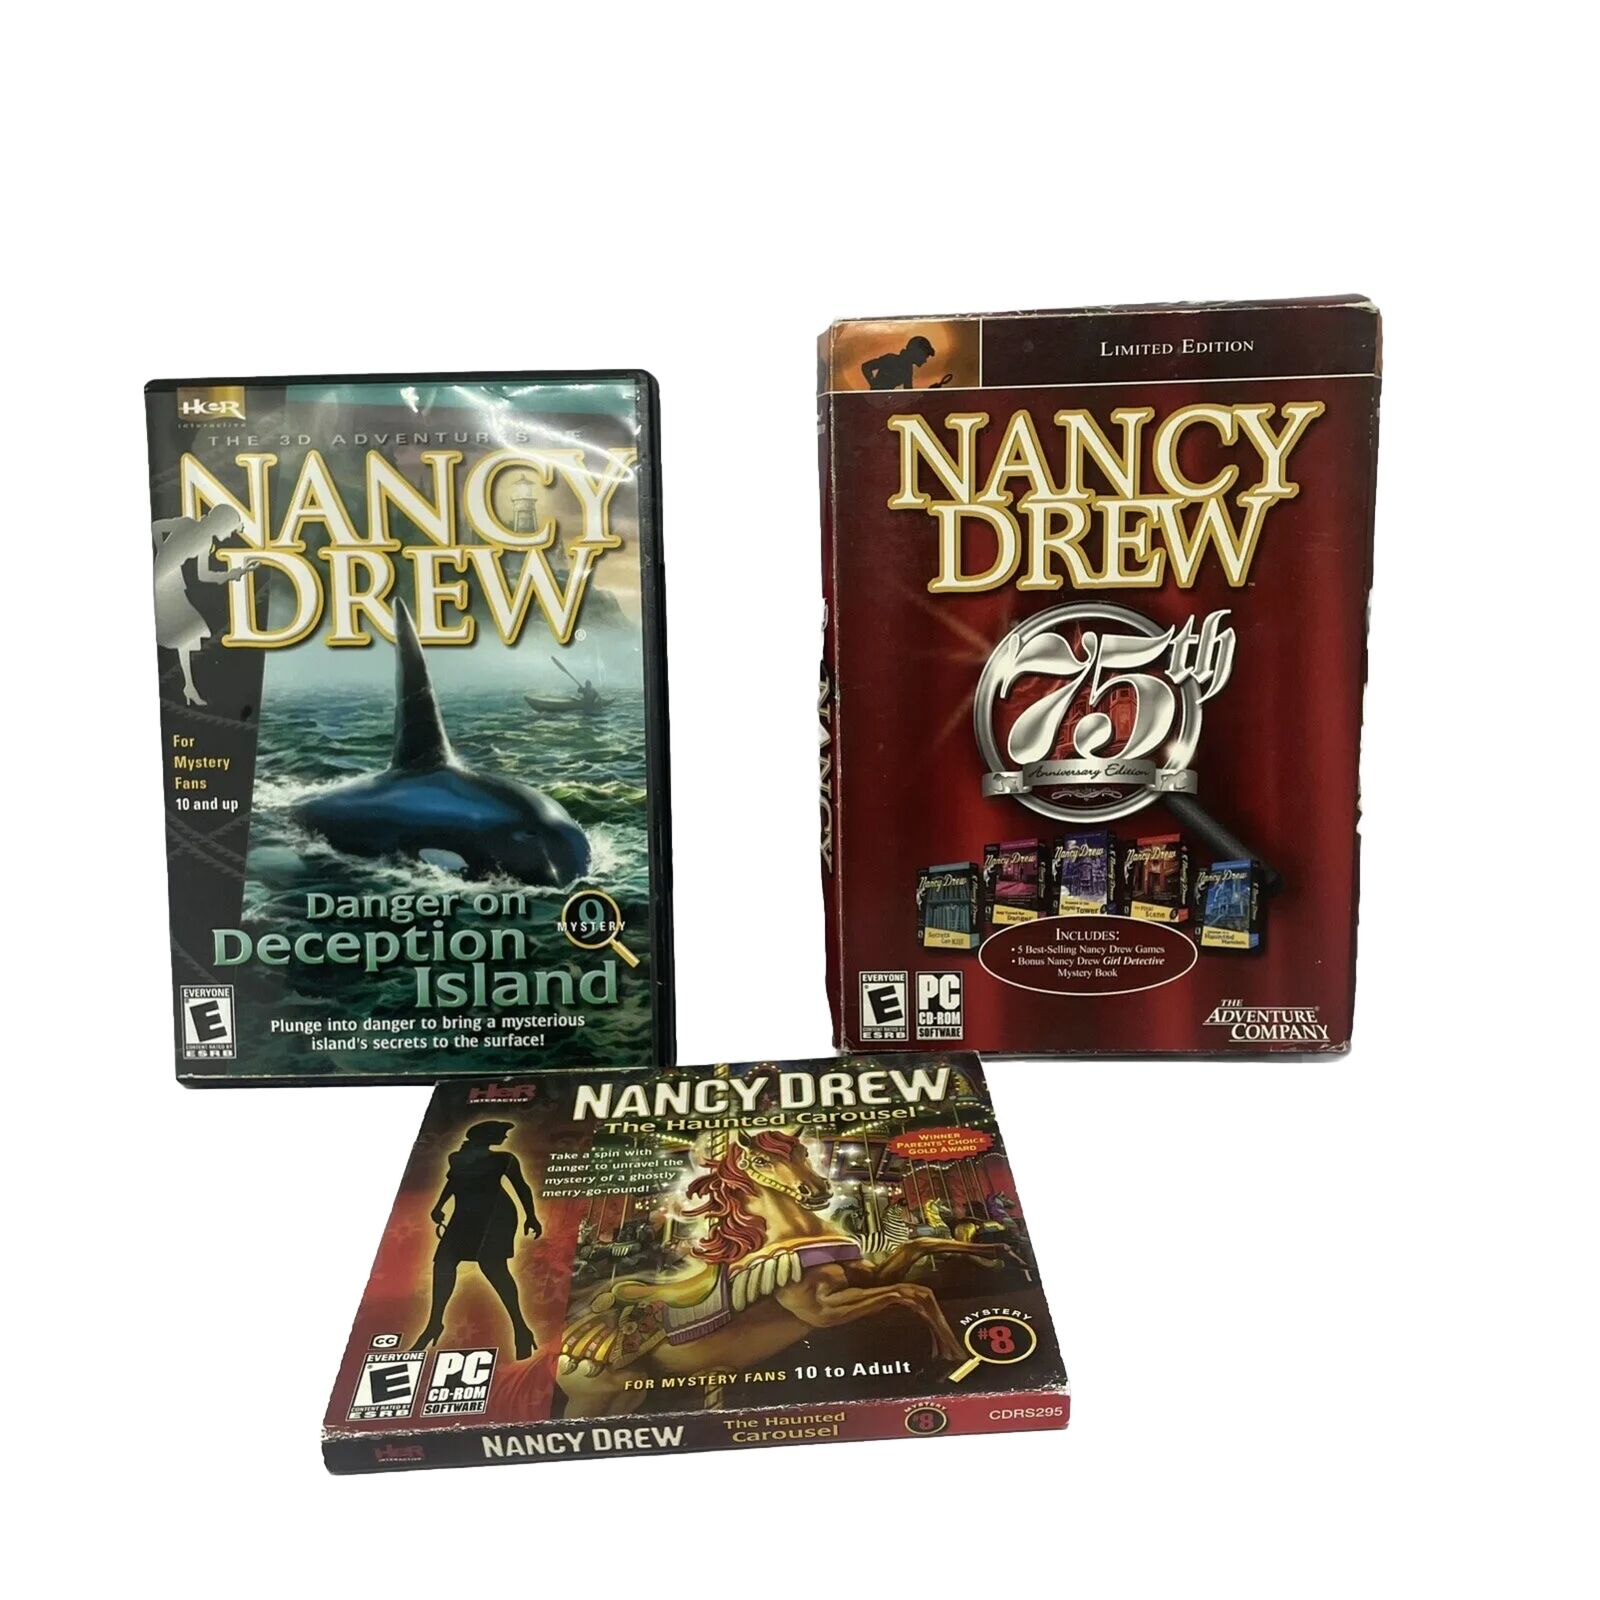 Nancy Drew 75th Anniversary Limited Edition Box Plus PC Games